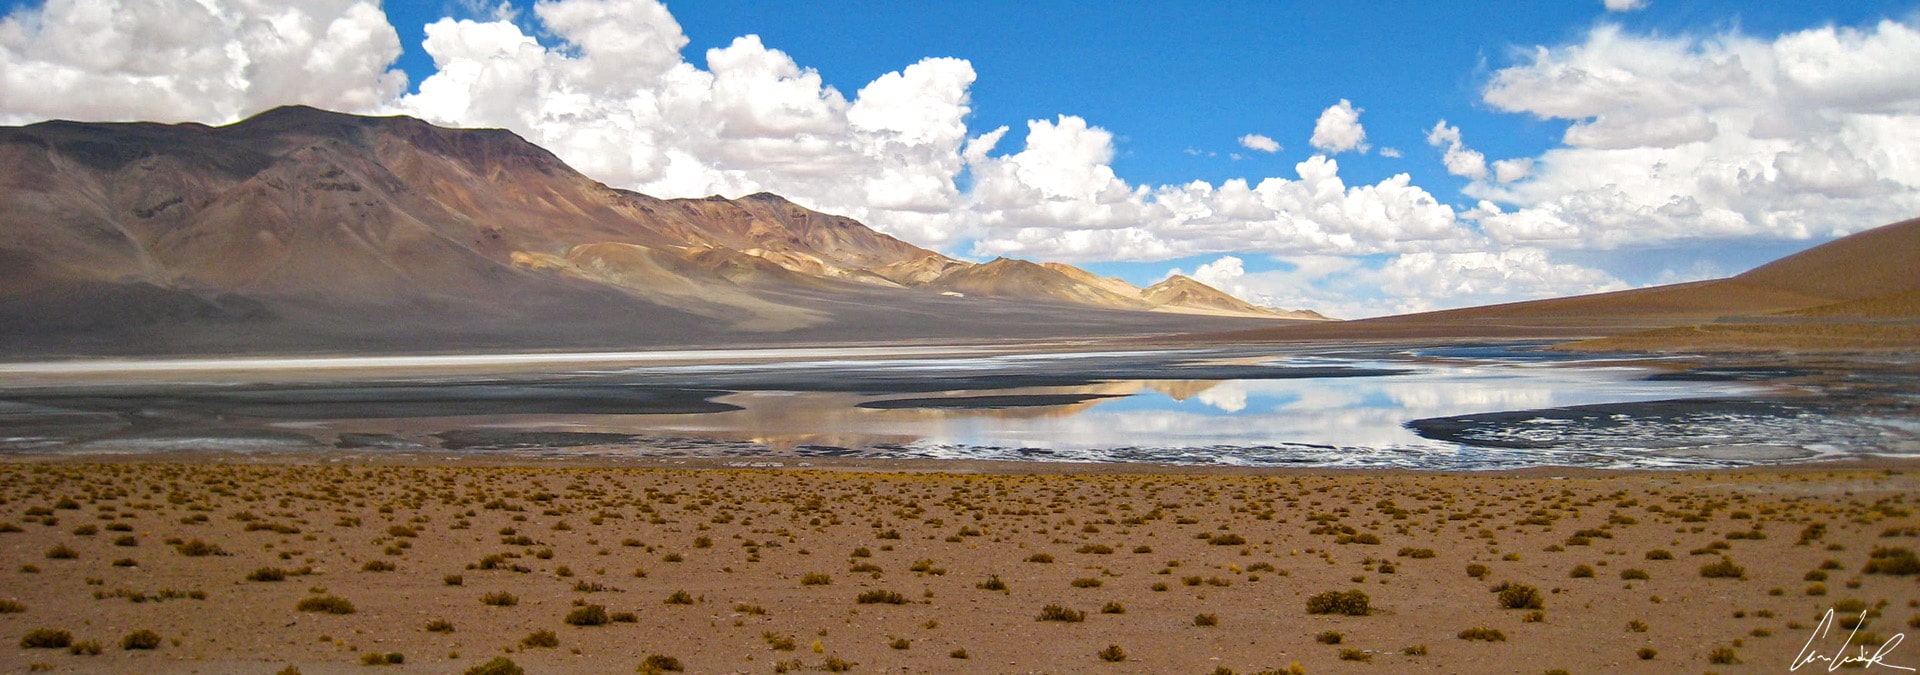 El Tatio Geysers: the magical Atacama’s geothermal field